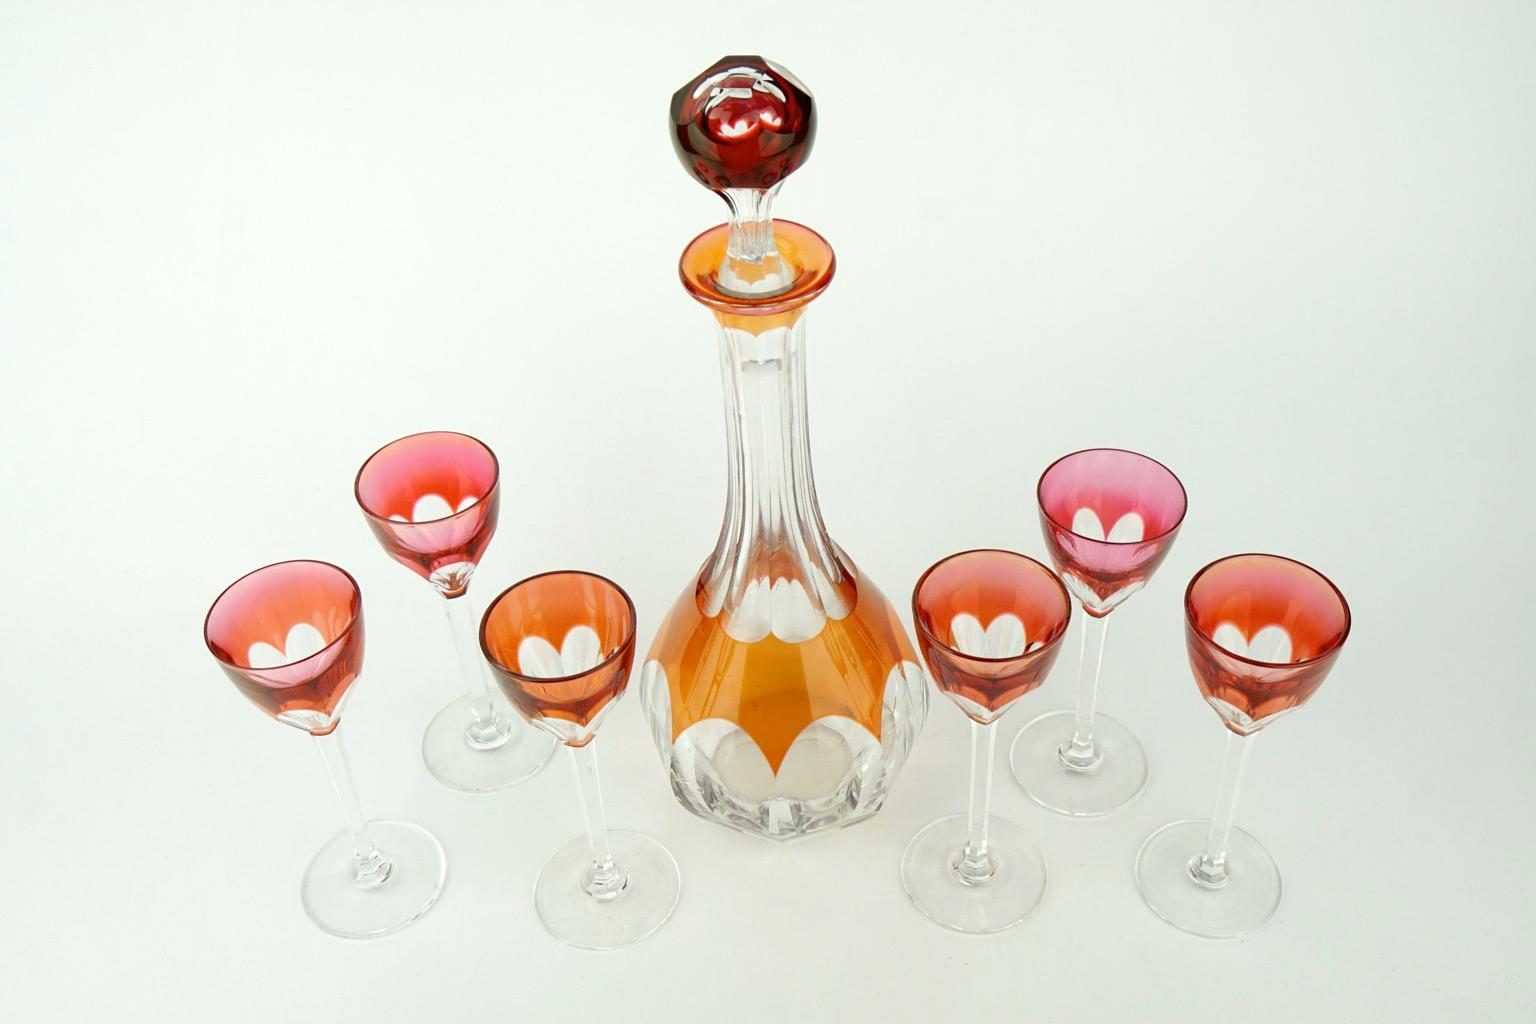 Mid-20th Century Art Deco Orange Val Saint Lambert Gondole Liquor Service Decanter and Glasses For Sale